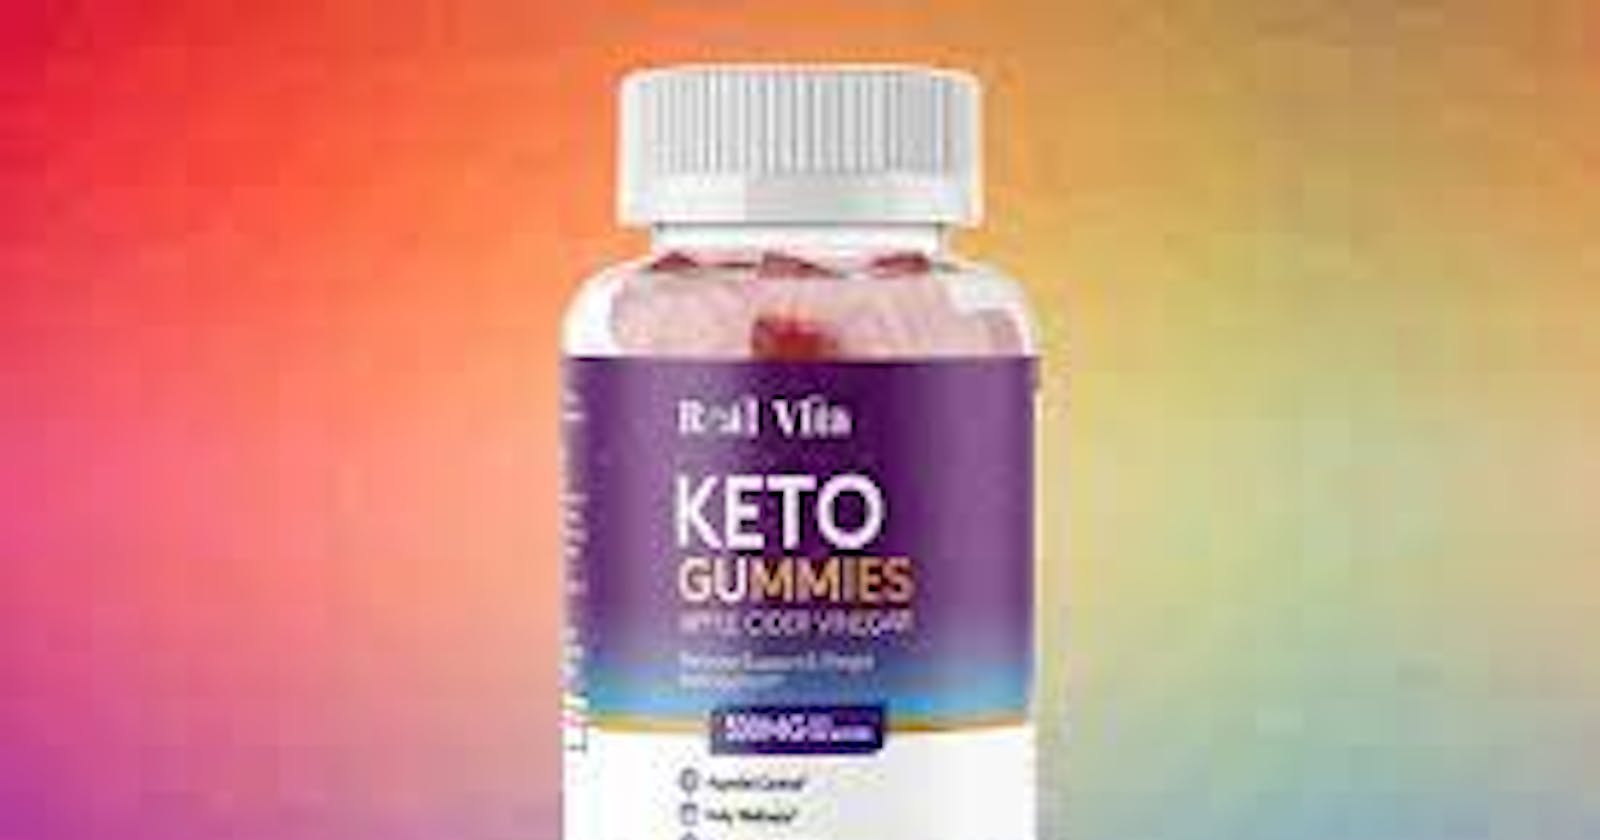 Real Vita Keto ACV Gummies Price & Review